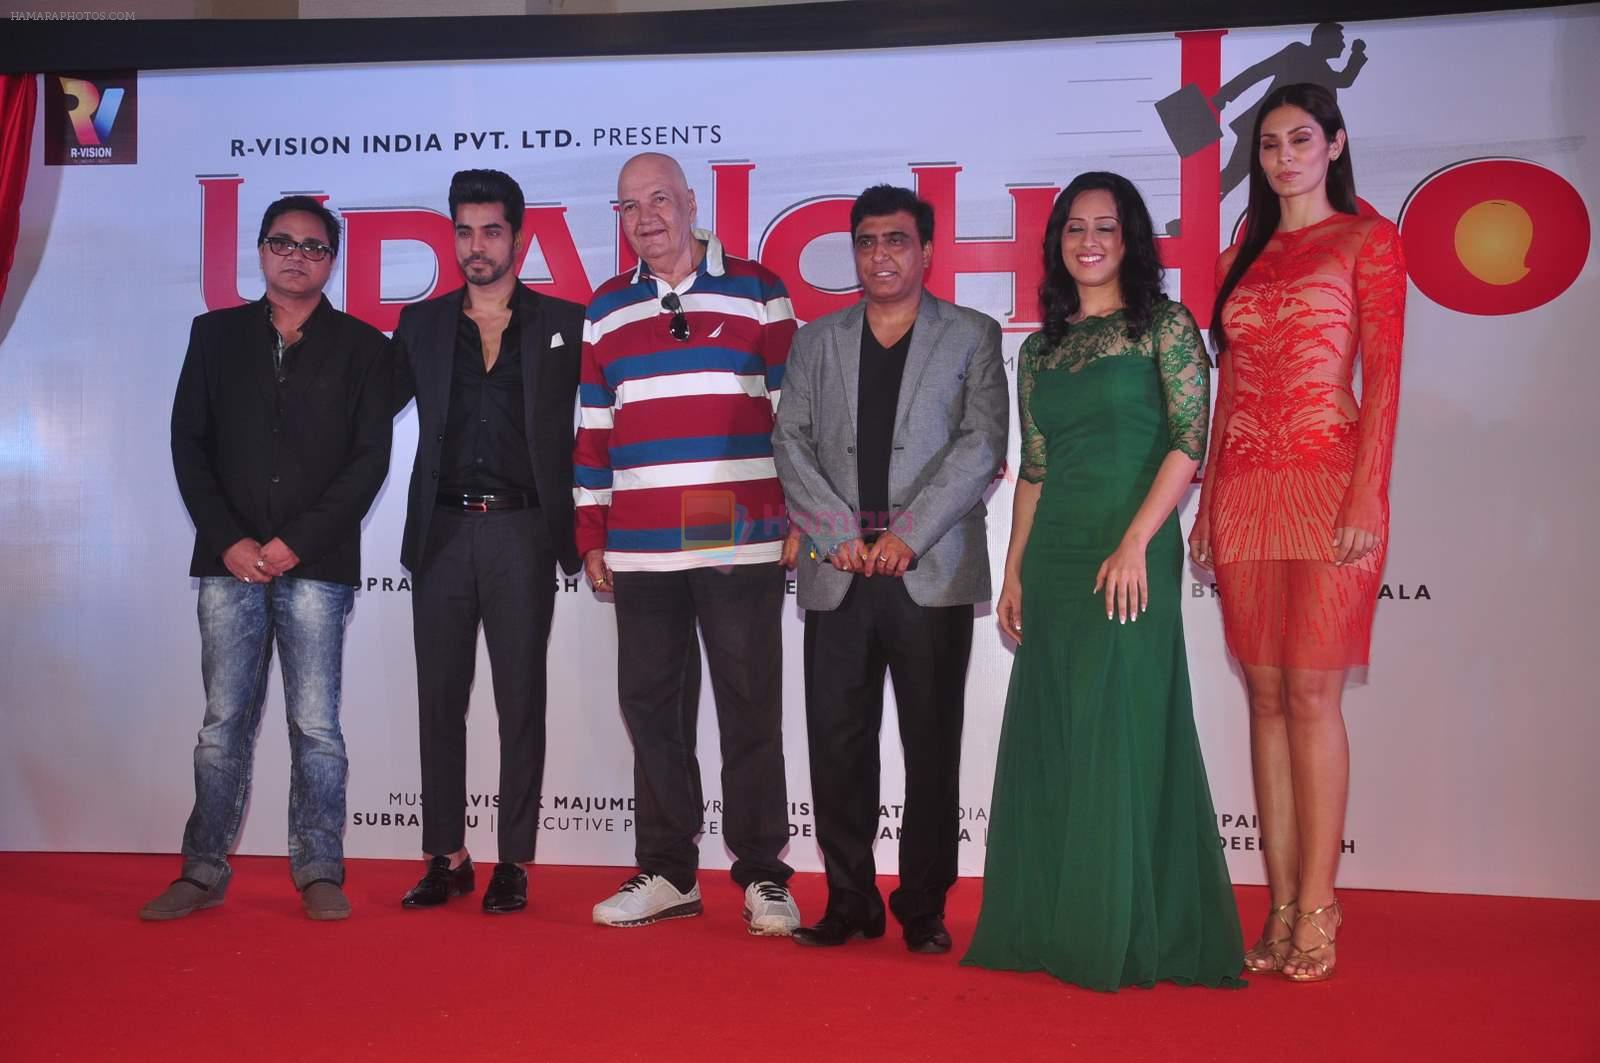 Vipin Parashar, Gautam Gulati,Saisha Sehgal, Prem Chopra, Ravindra Singh,Bruna Abdullah at the launch of R-Vision's movie Udanchhoo directed by Vipin Parashar on 31st March 2015